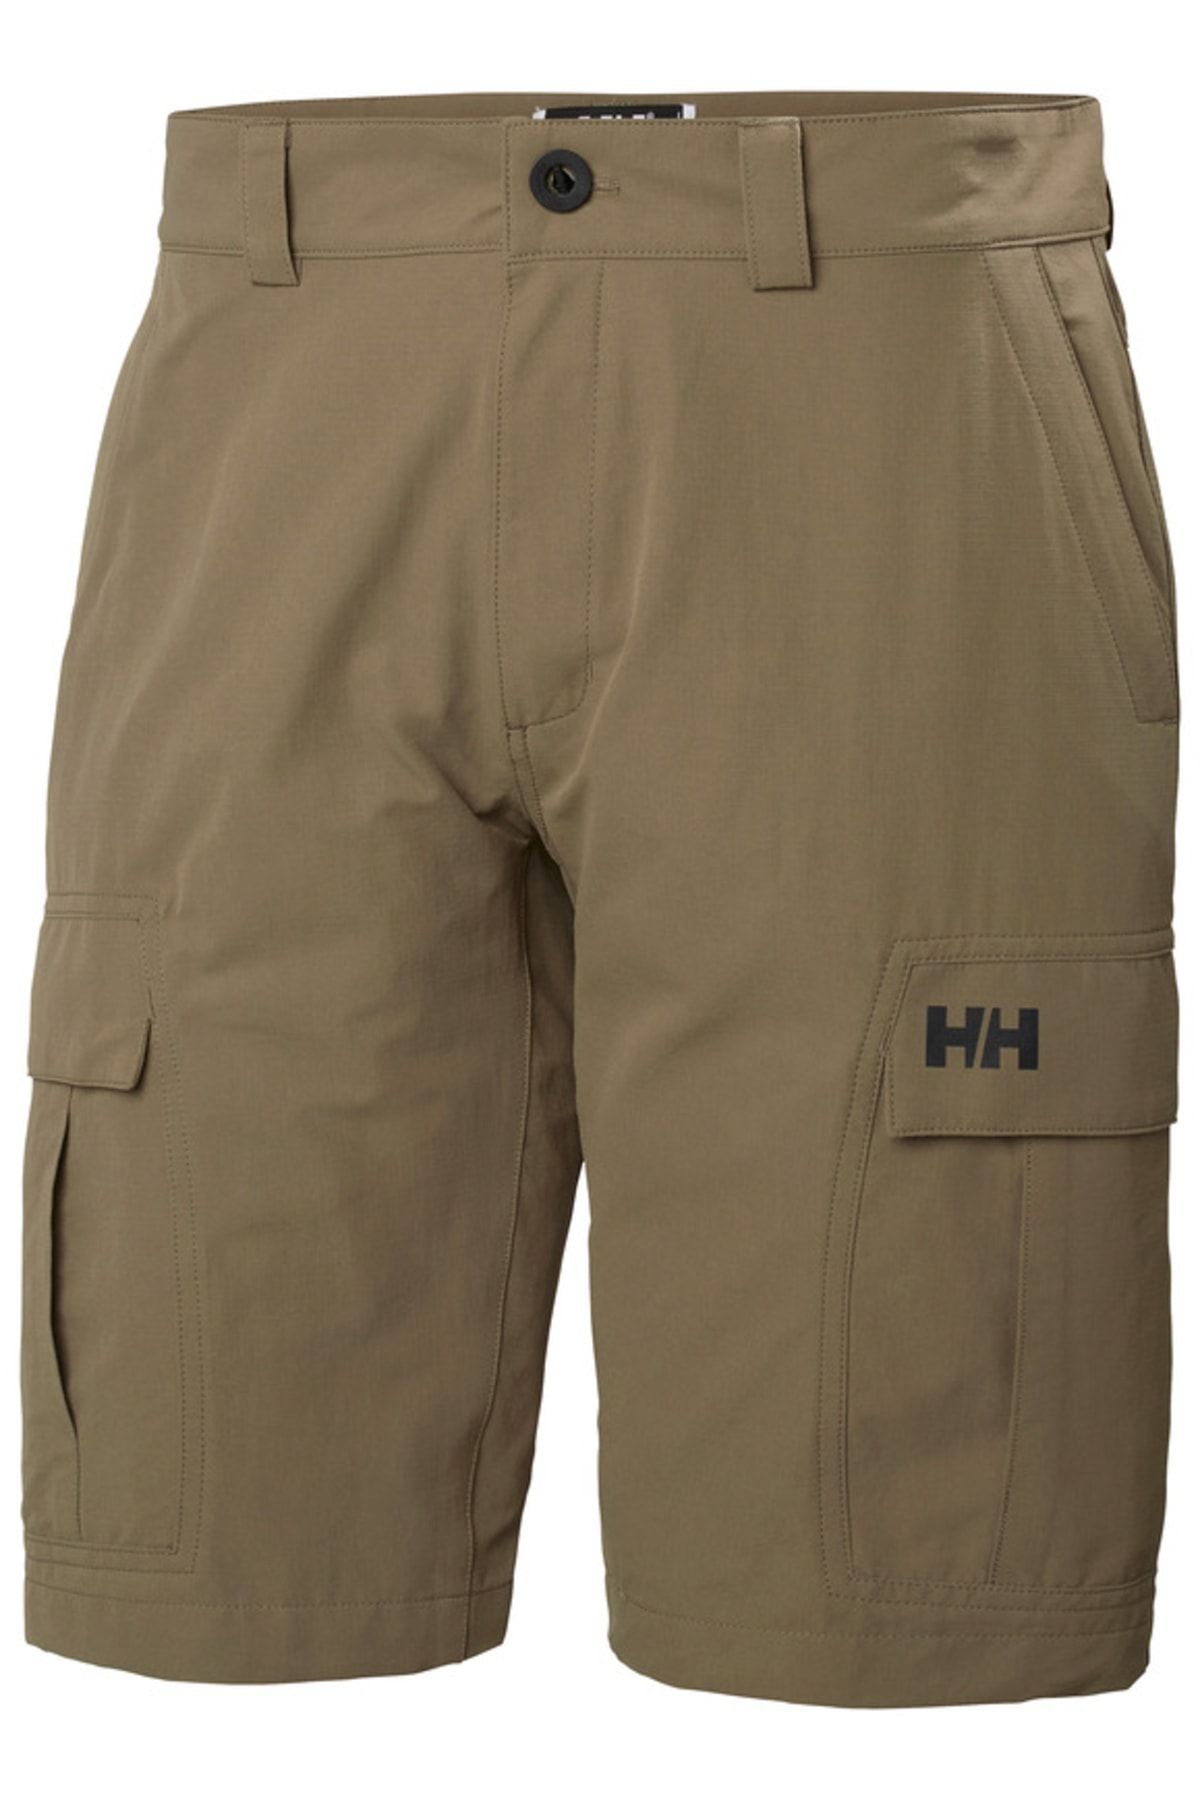 Helly Hansen Hh Qd Cargo Shorts 11" Erkek Kahverengi Şort Hha.54154-hha.746